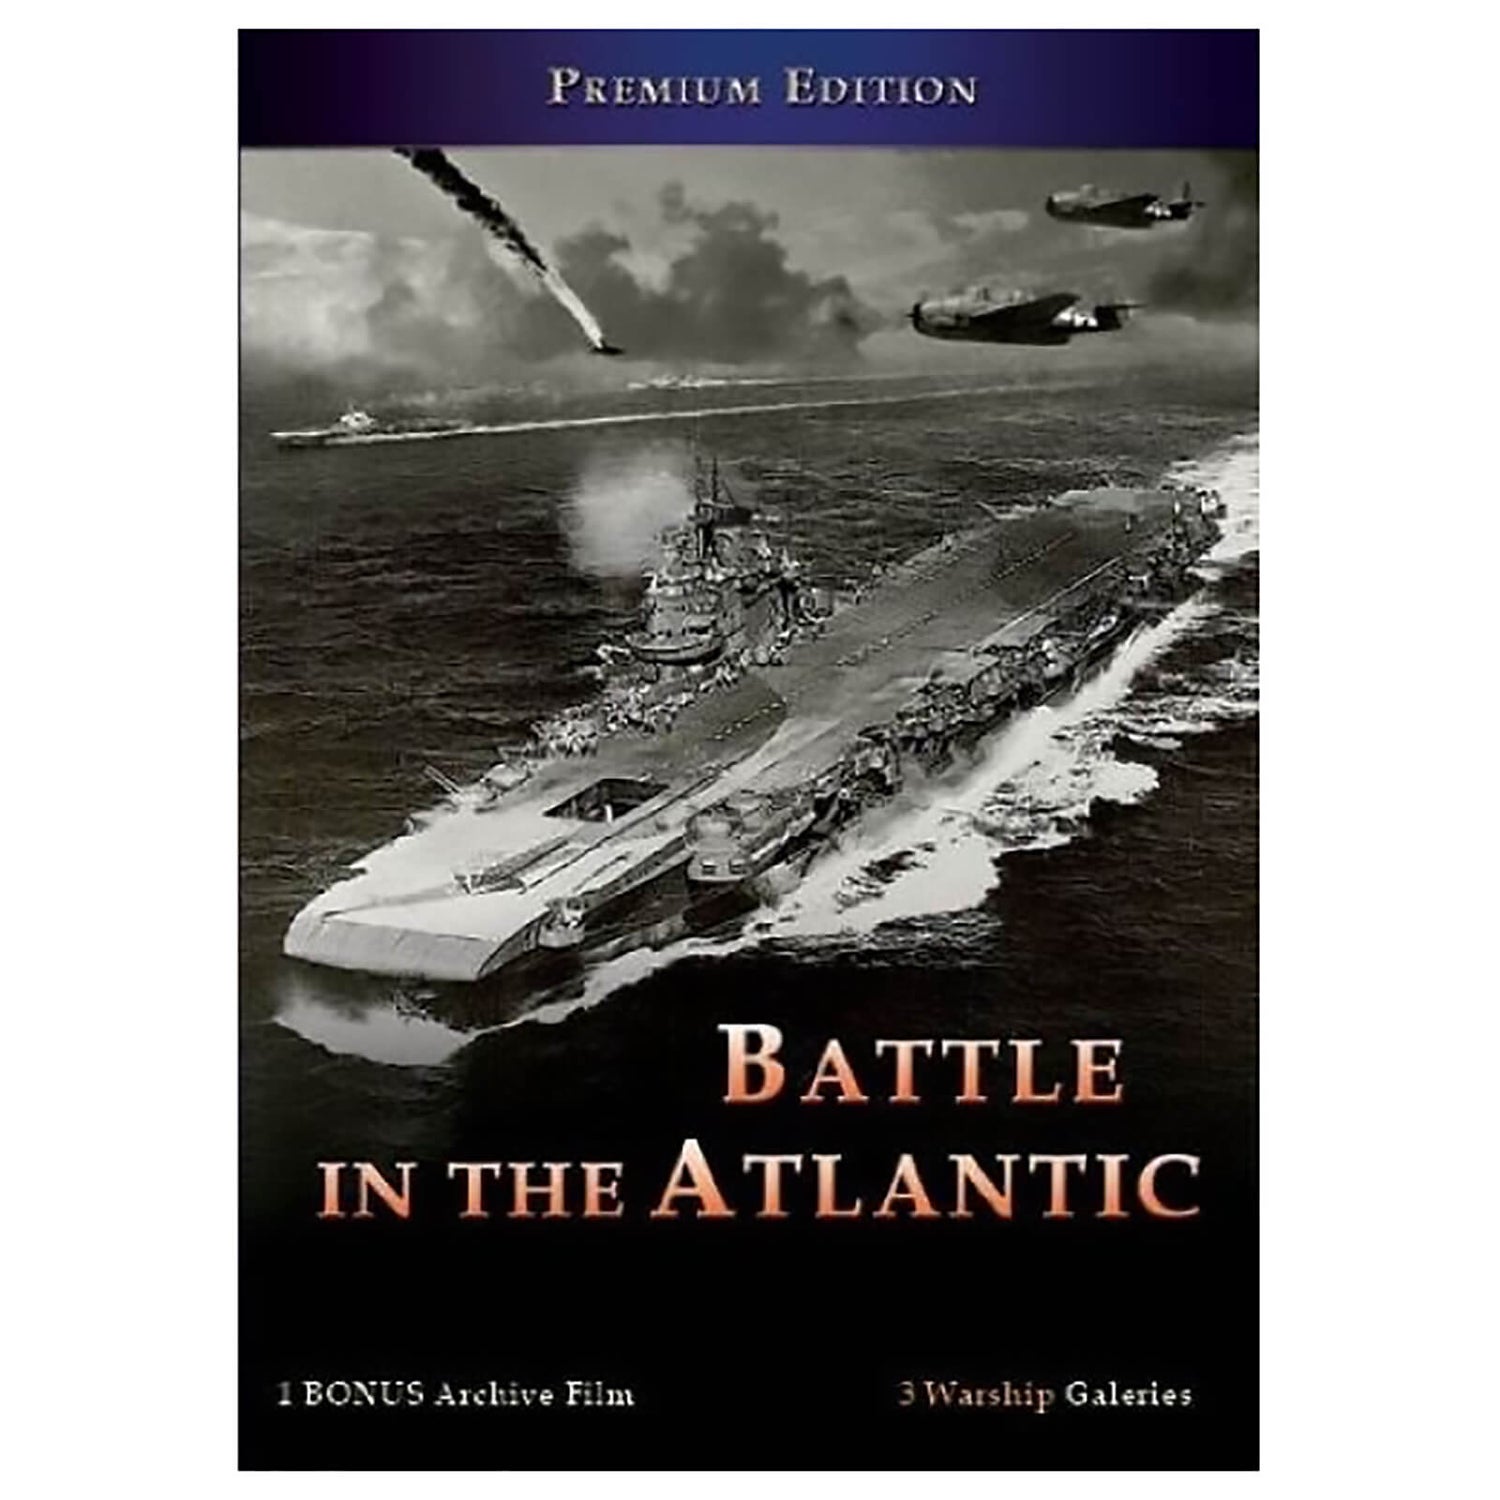 Battle in the Atlantic